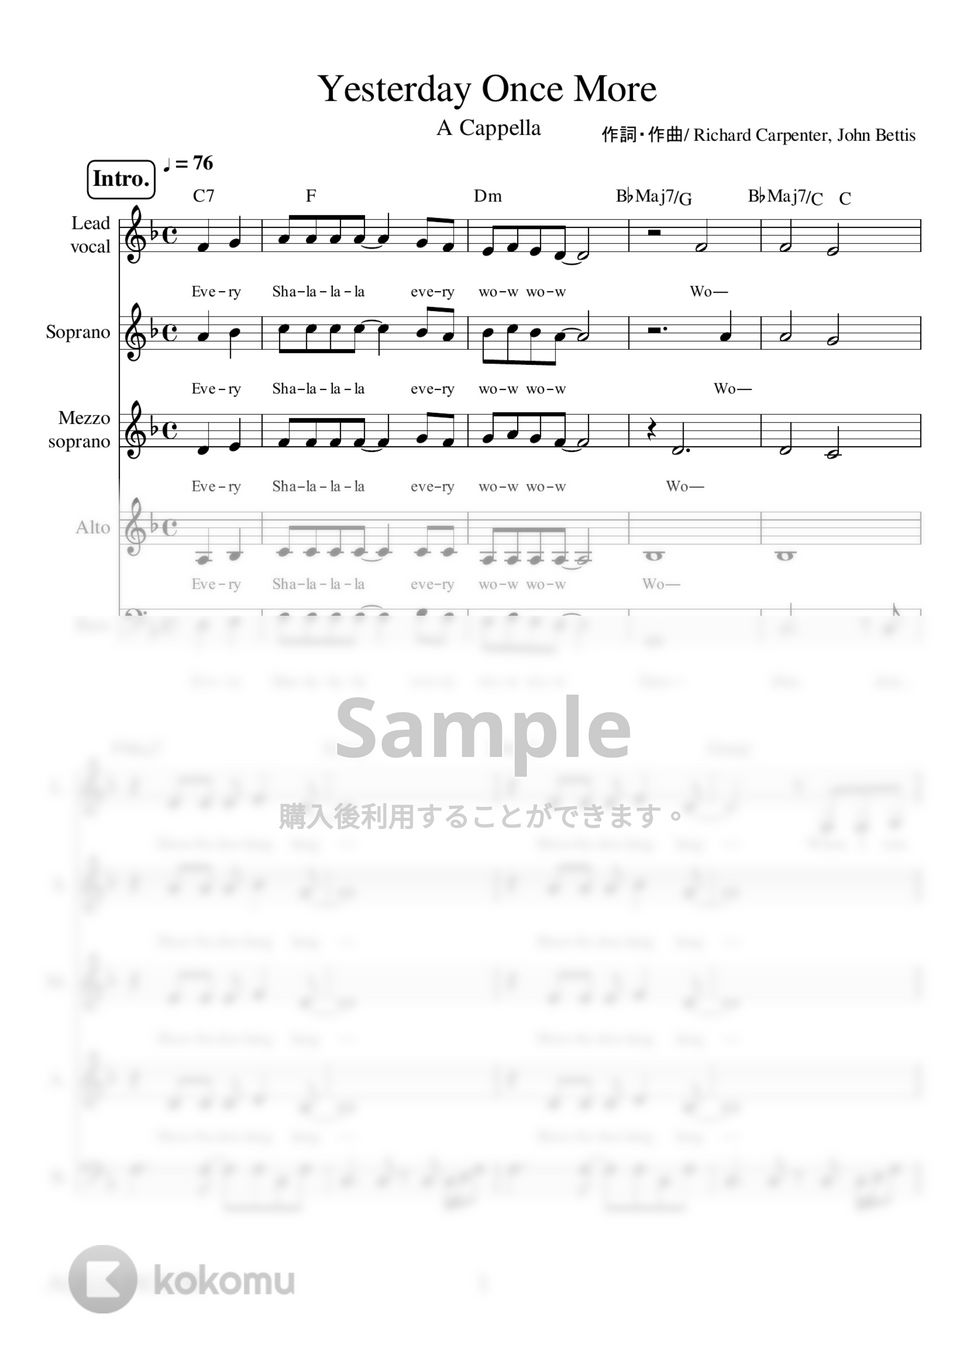 Carpenters - Yesterday Once More (アカペラ楽譜♪5声ボイパなし) by 飯田 亜紗子